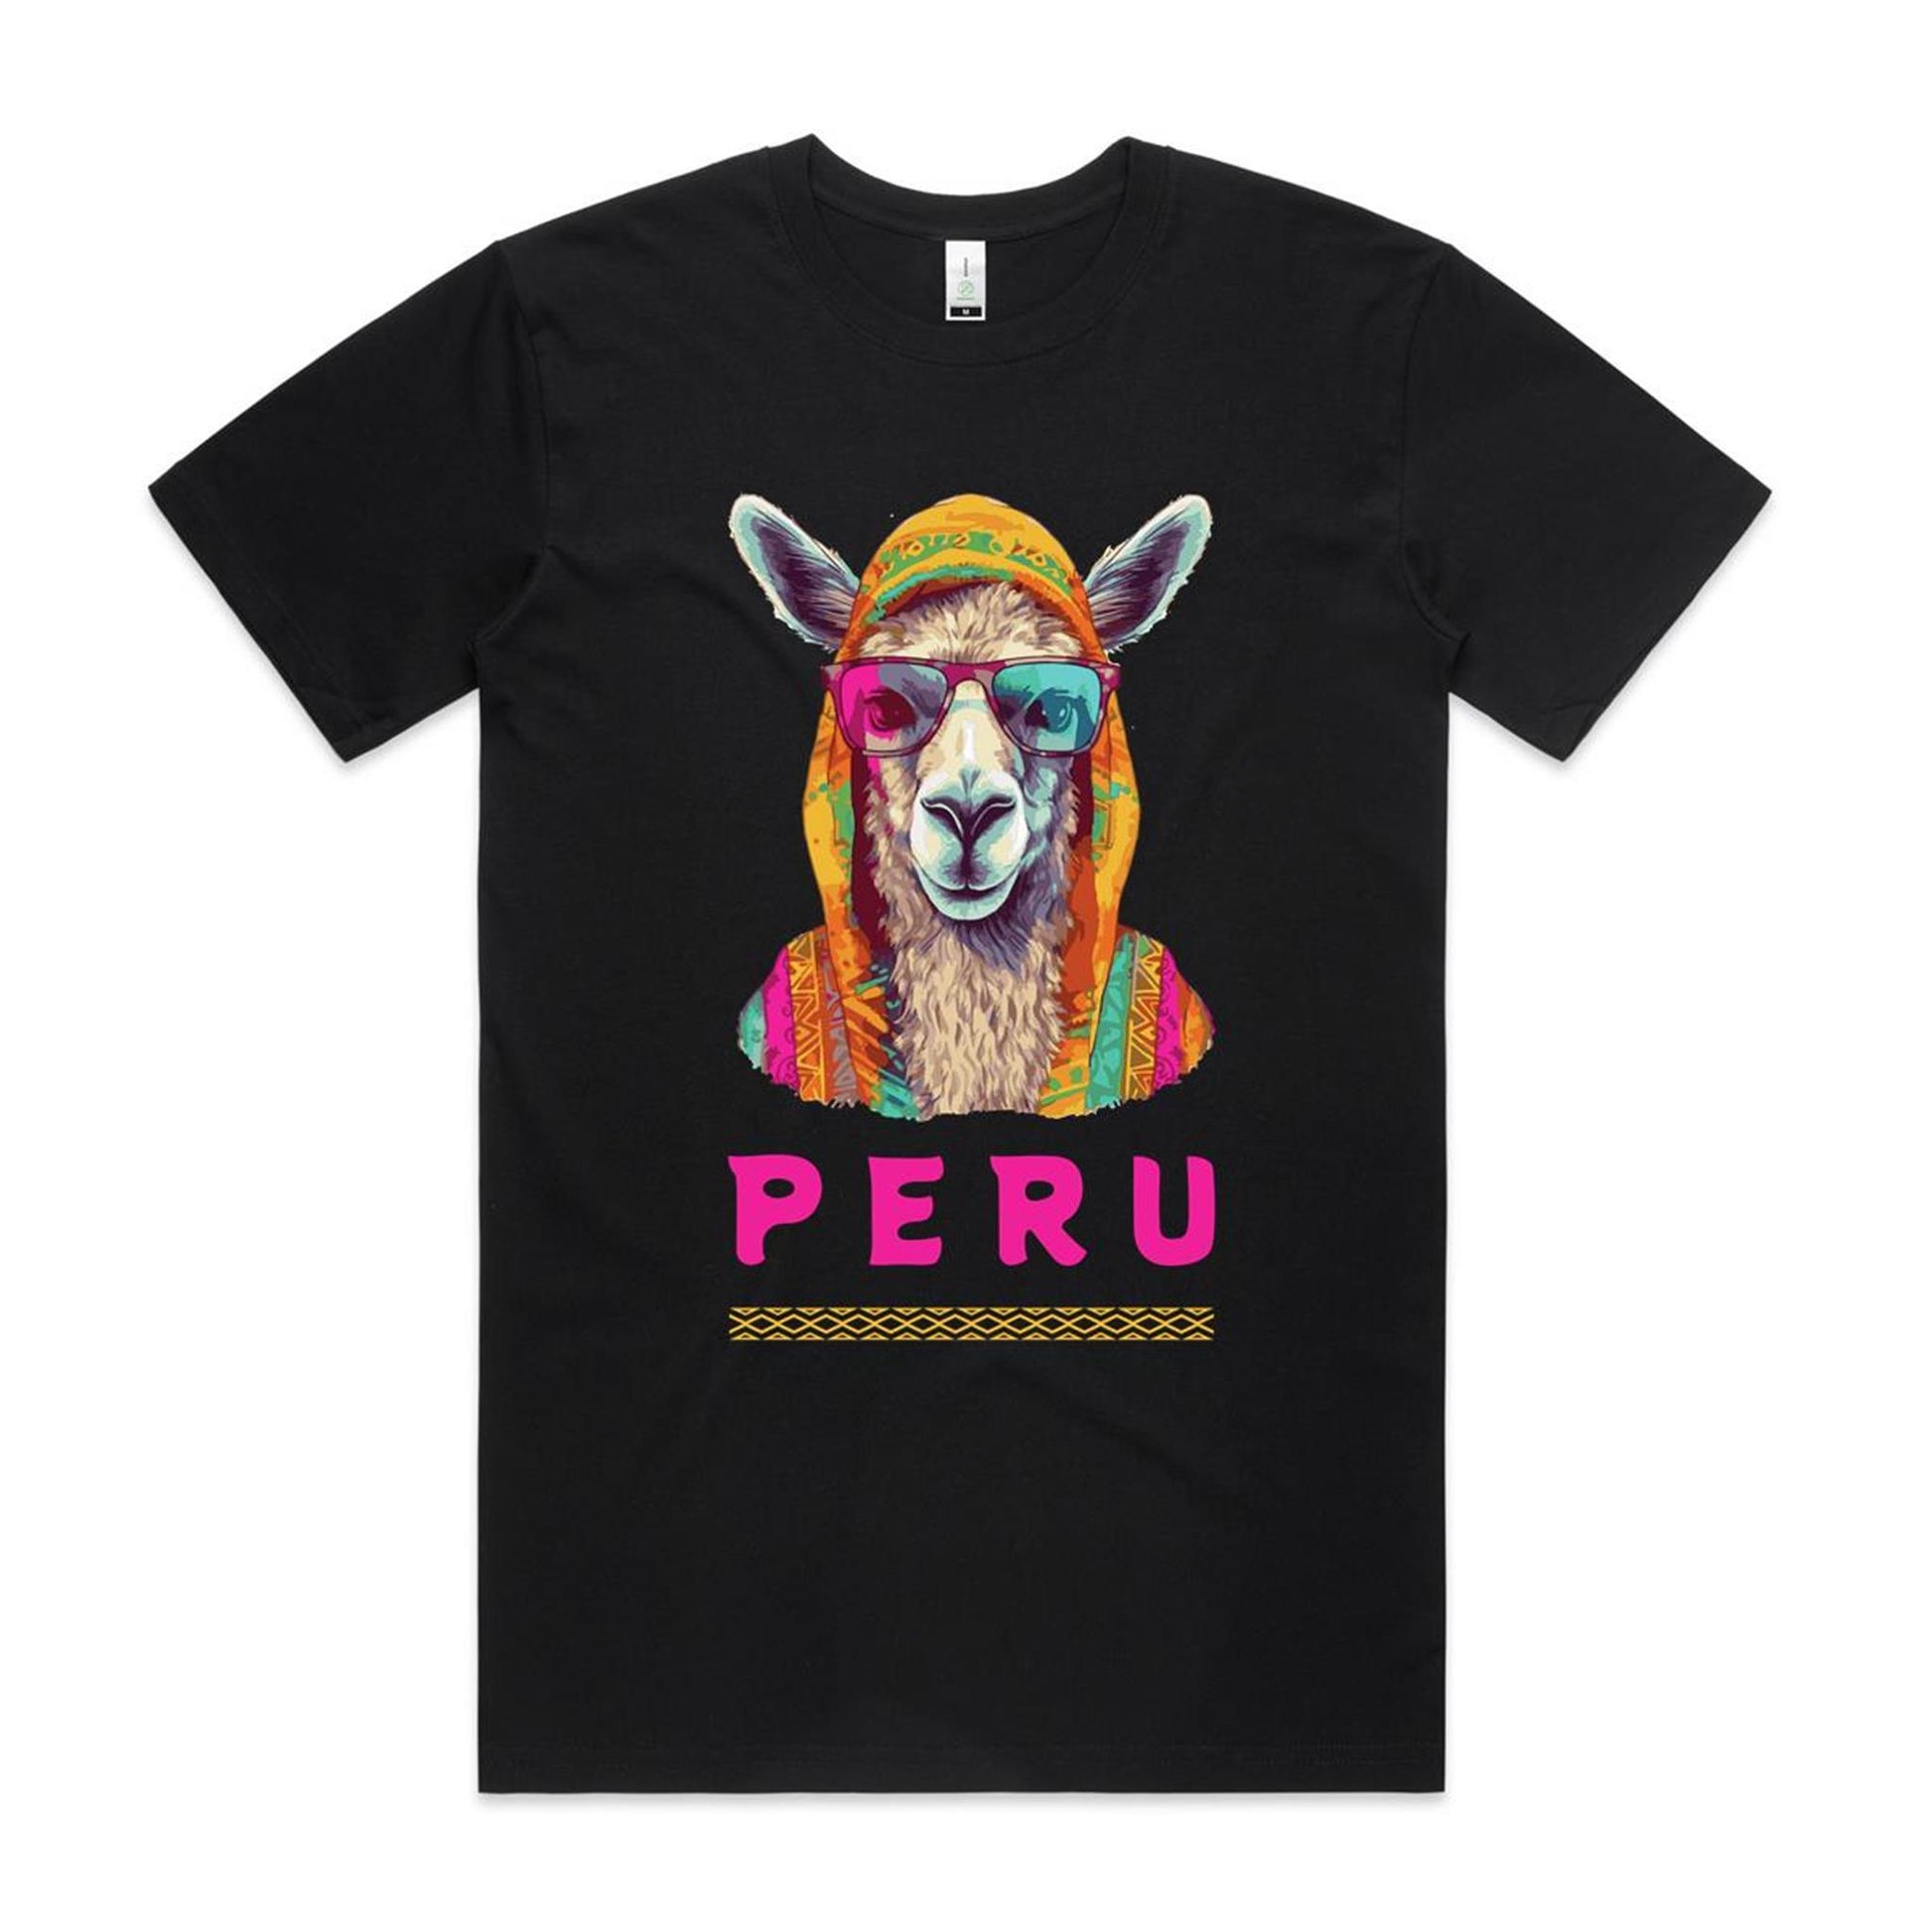 Peru T-shirt, llama graphic tee, organic cotton.